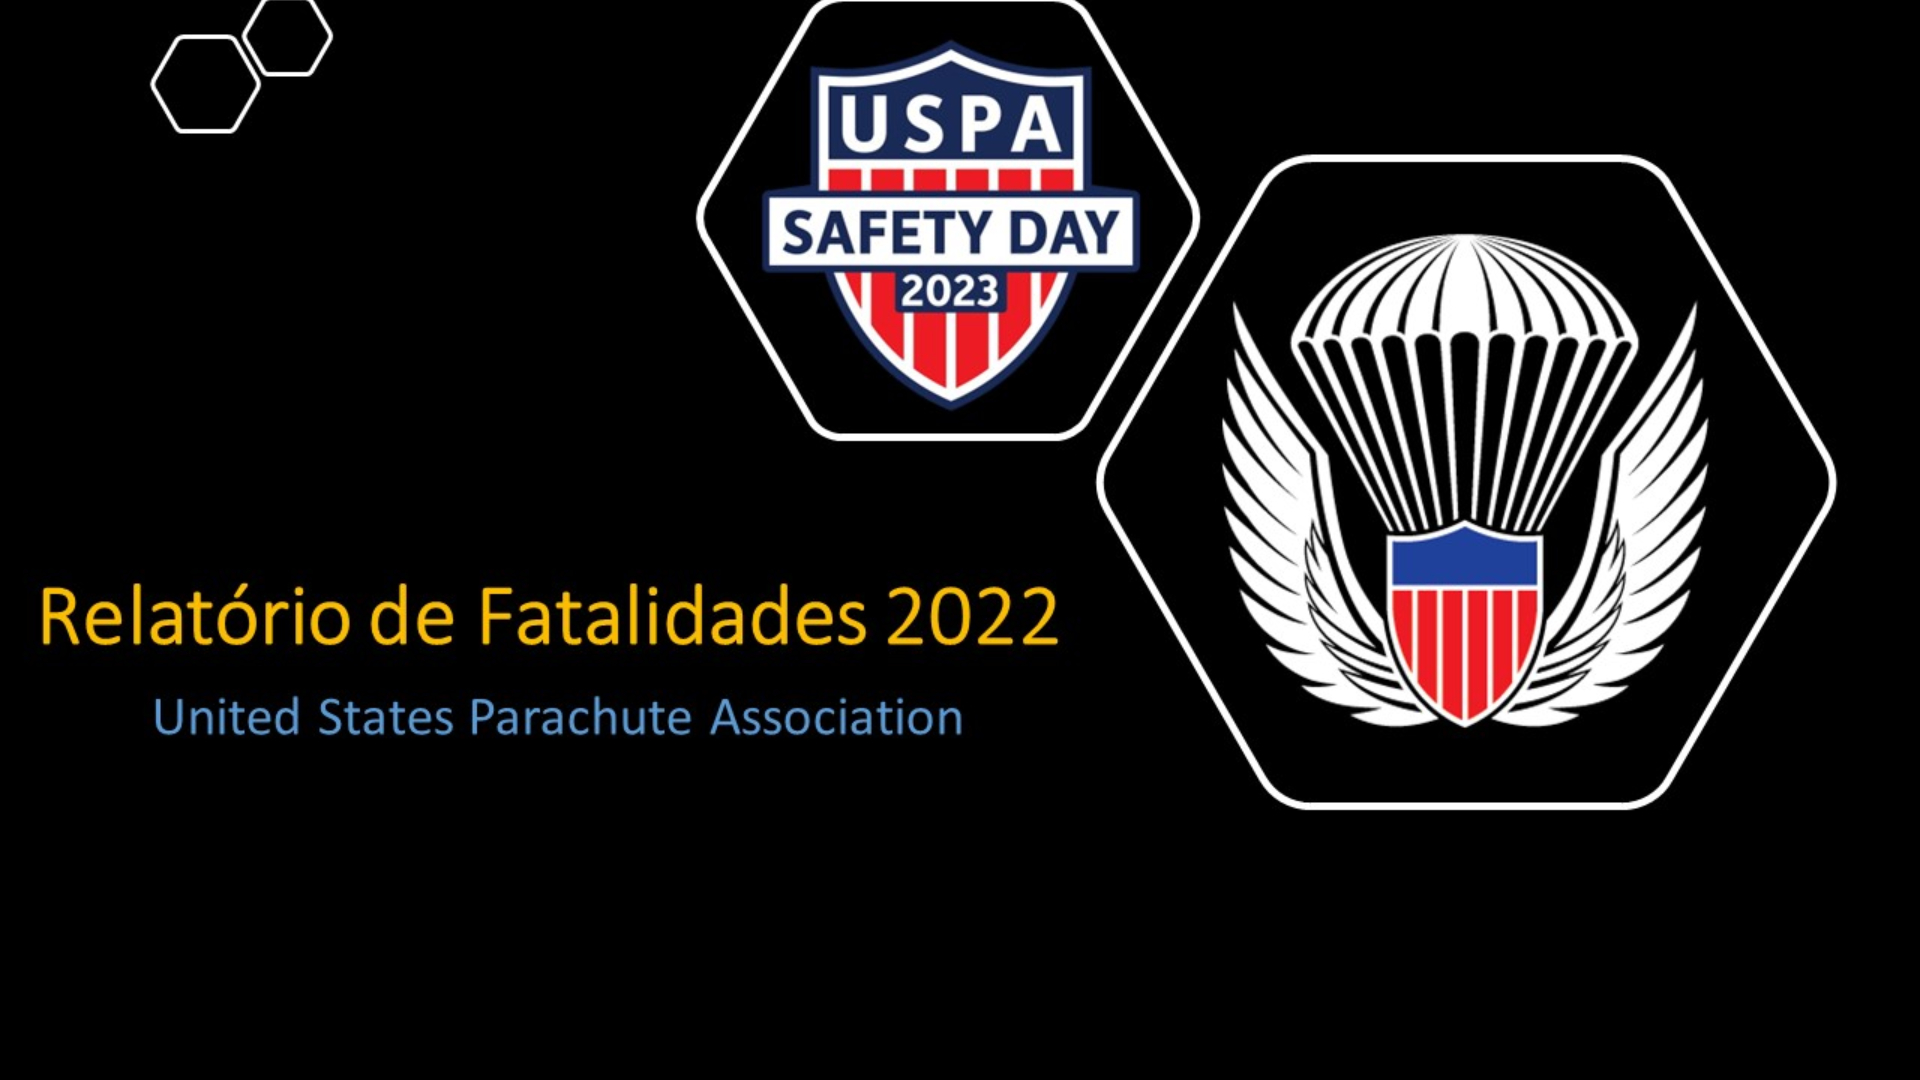 USPA Safety Day Relatório de Fatalidades 2022 SkyPoint